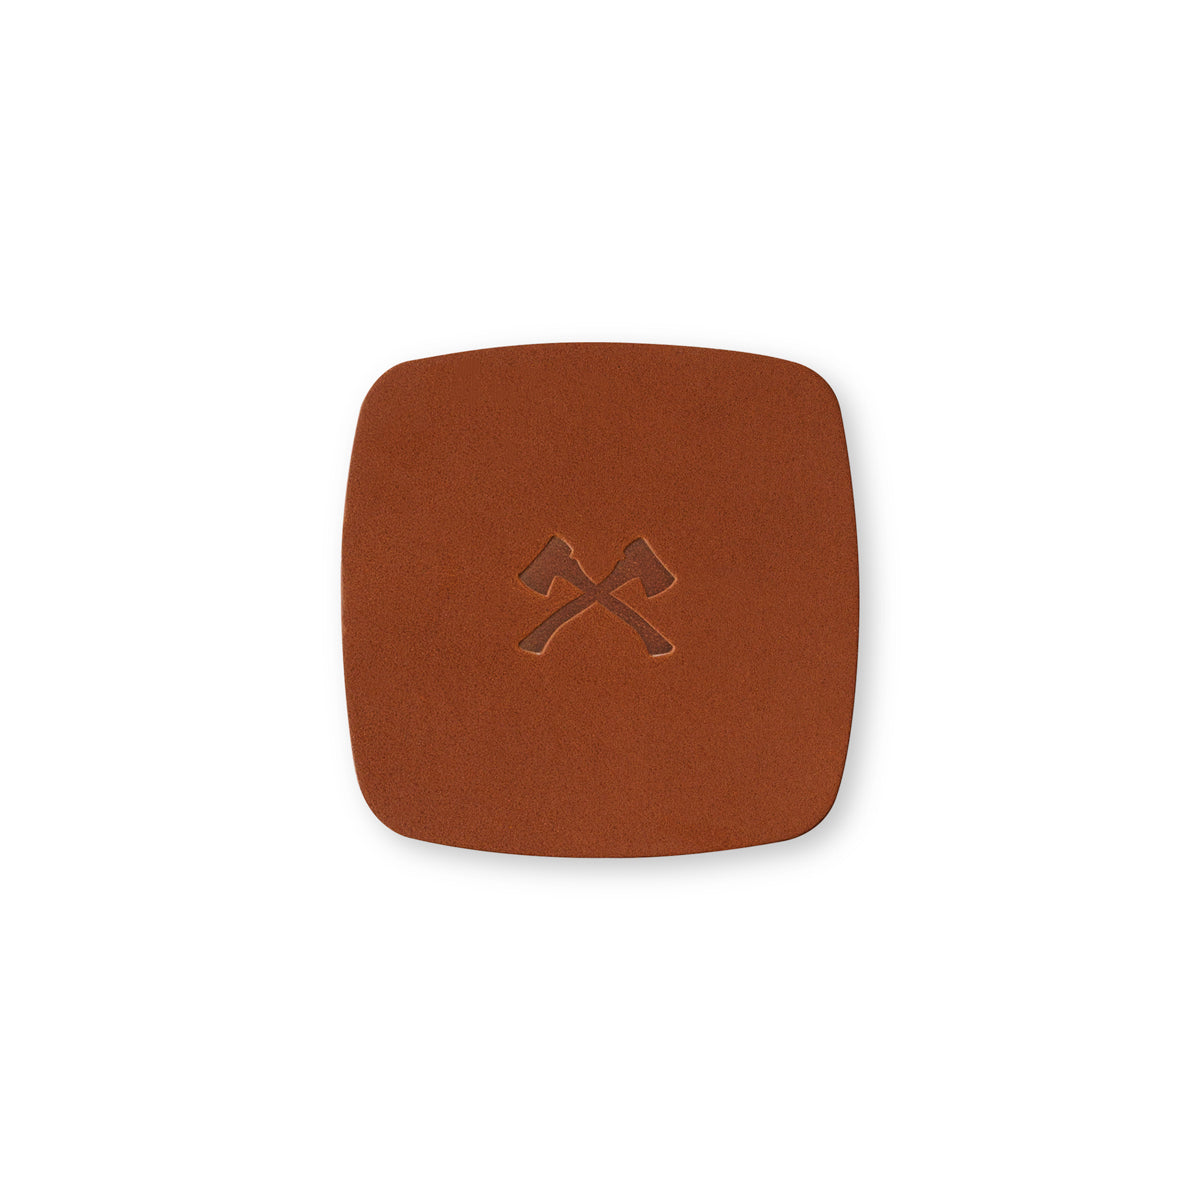 Leather Coaster Set - Tan